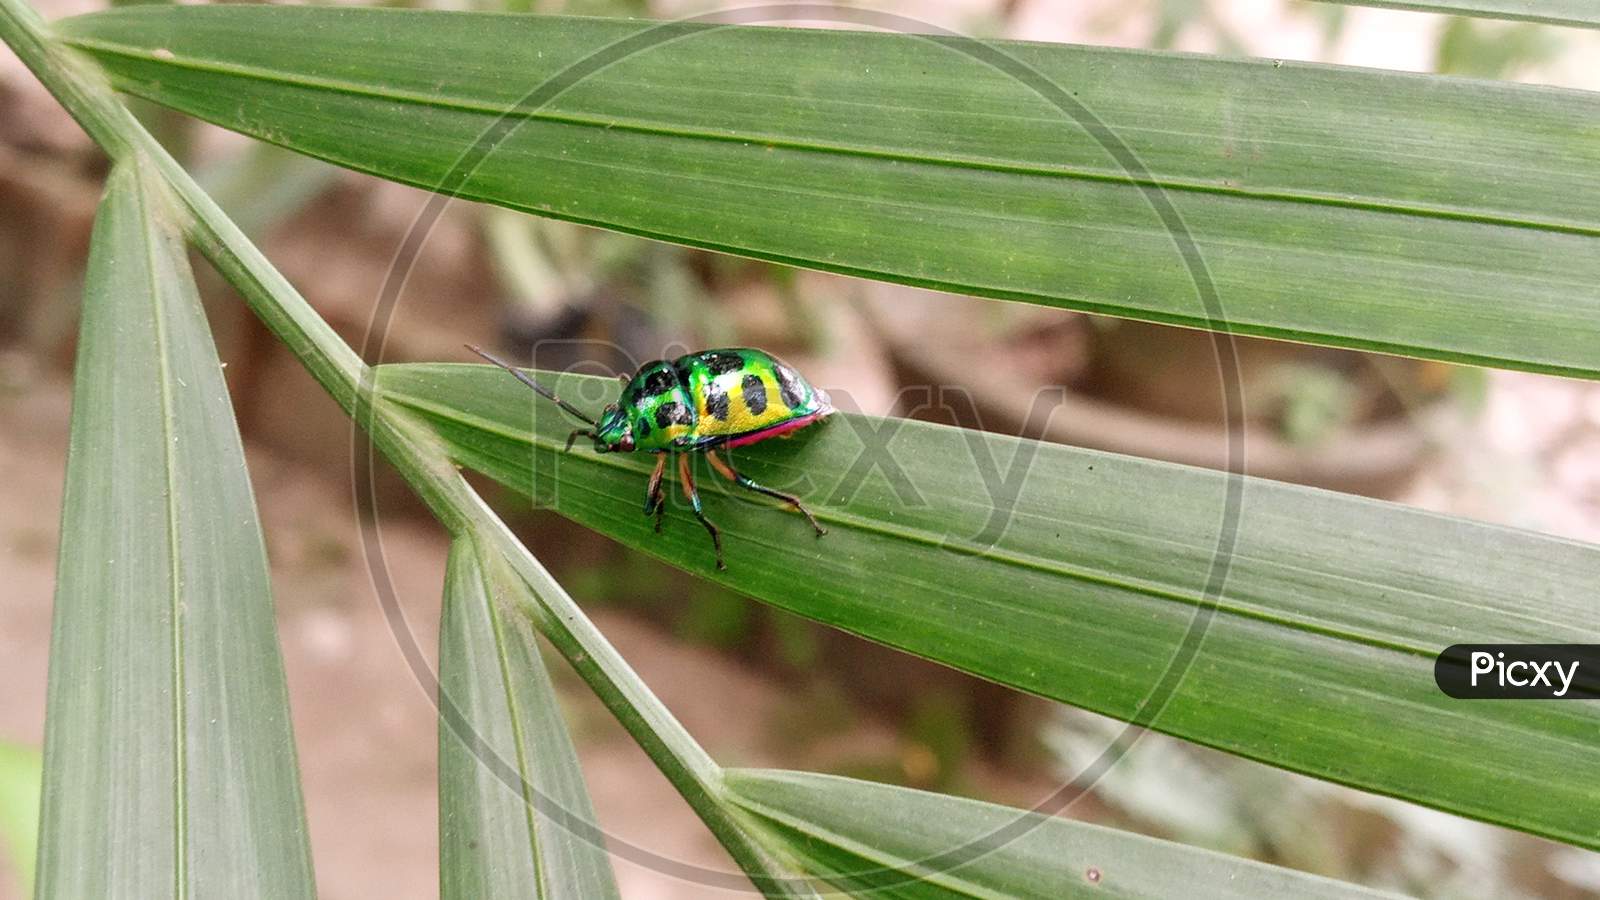 Lychee Shield-backed Jewel Bug